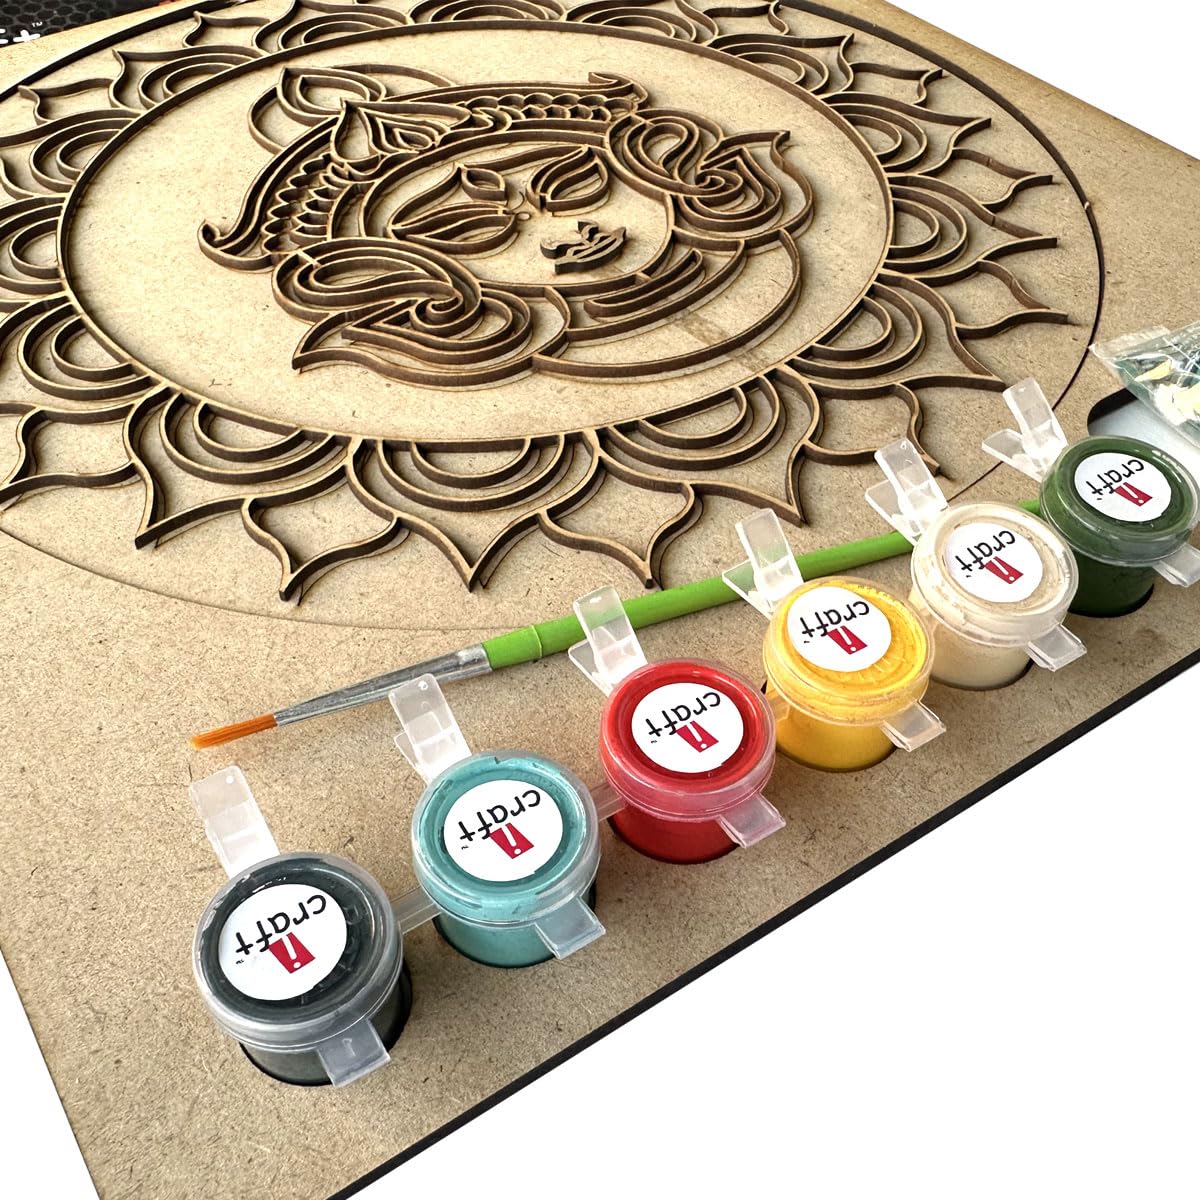 iCraft DIY Mandala Art Kit - Durga Design - 10x10